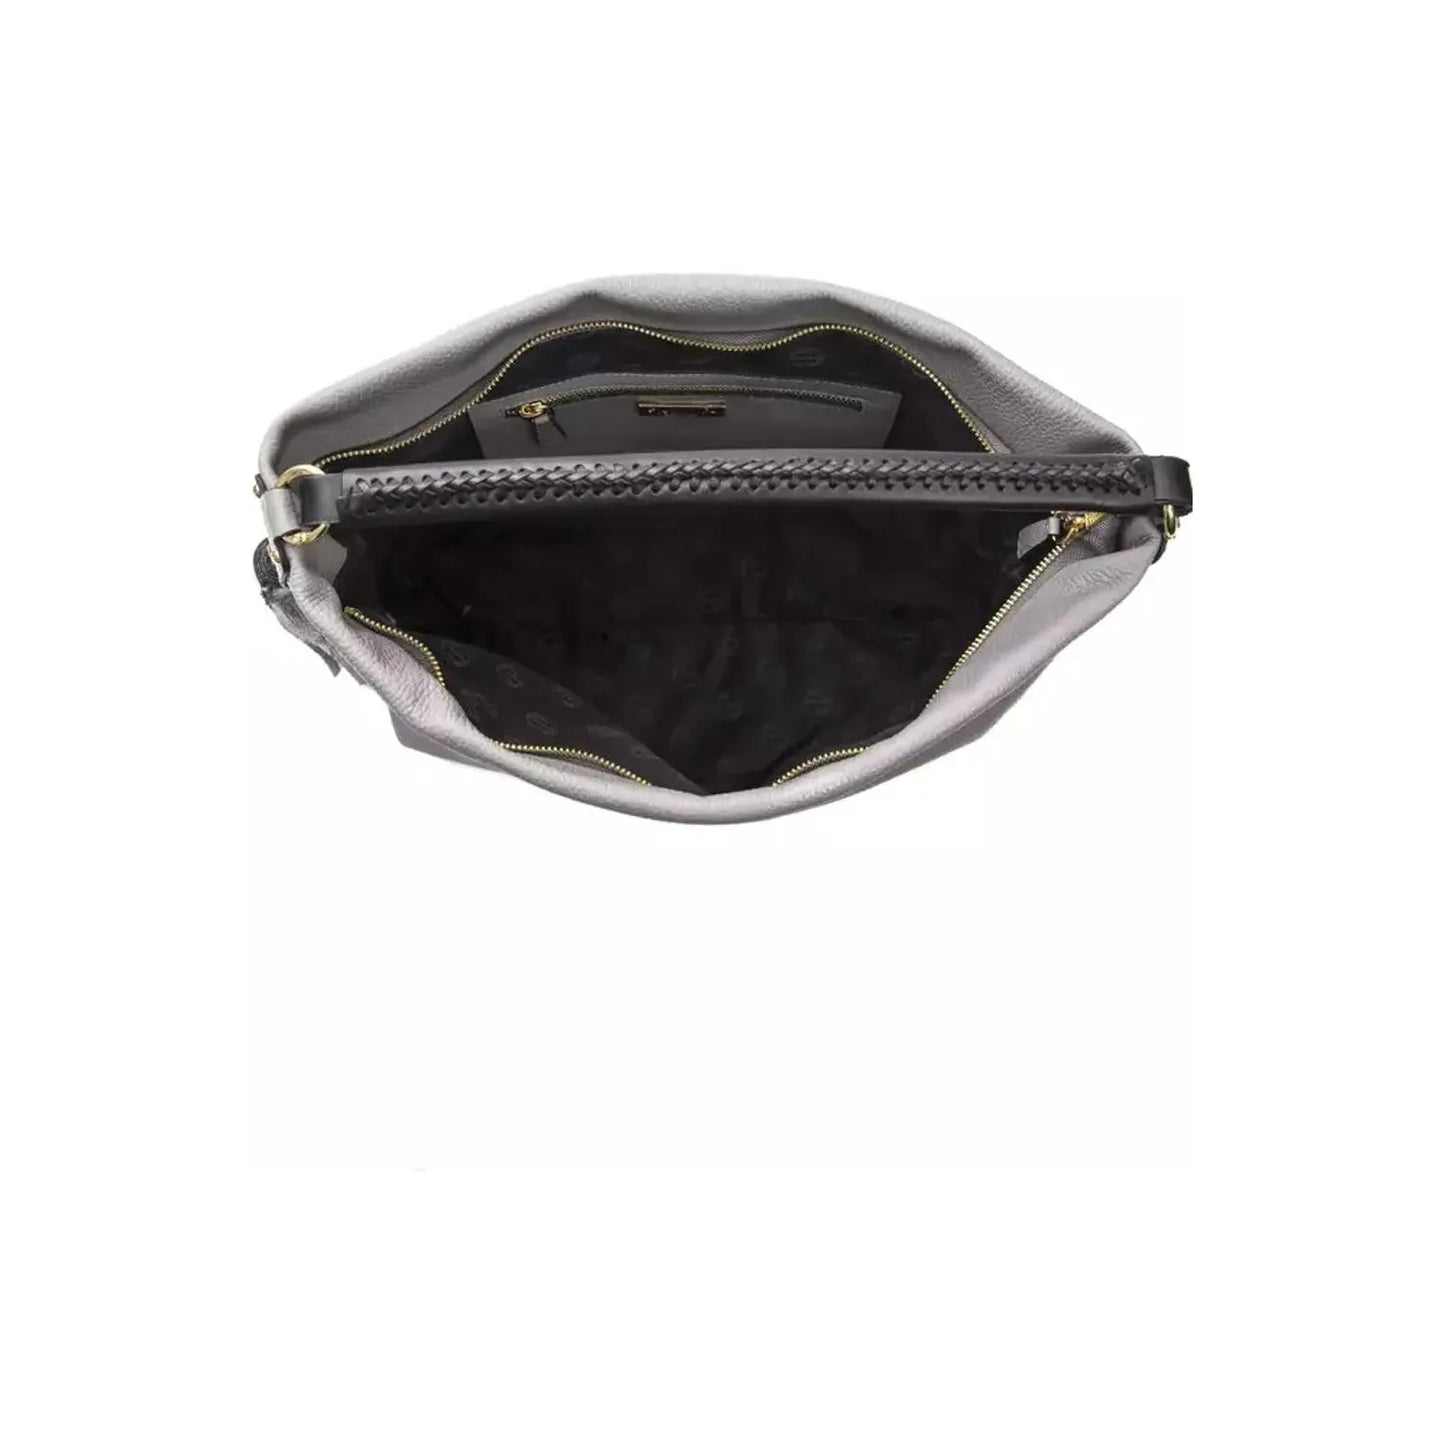 Pompei Donatella Chic Gray Leather Shoulder Bag WOMAN SHOULDER BAGS gray-leather-shoulder-bag-2 stock_product_image_5800_1206850373-21-85fd3d38-718.webp